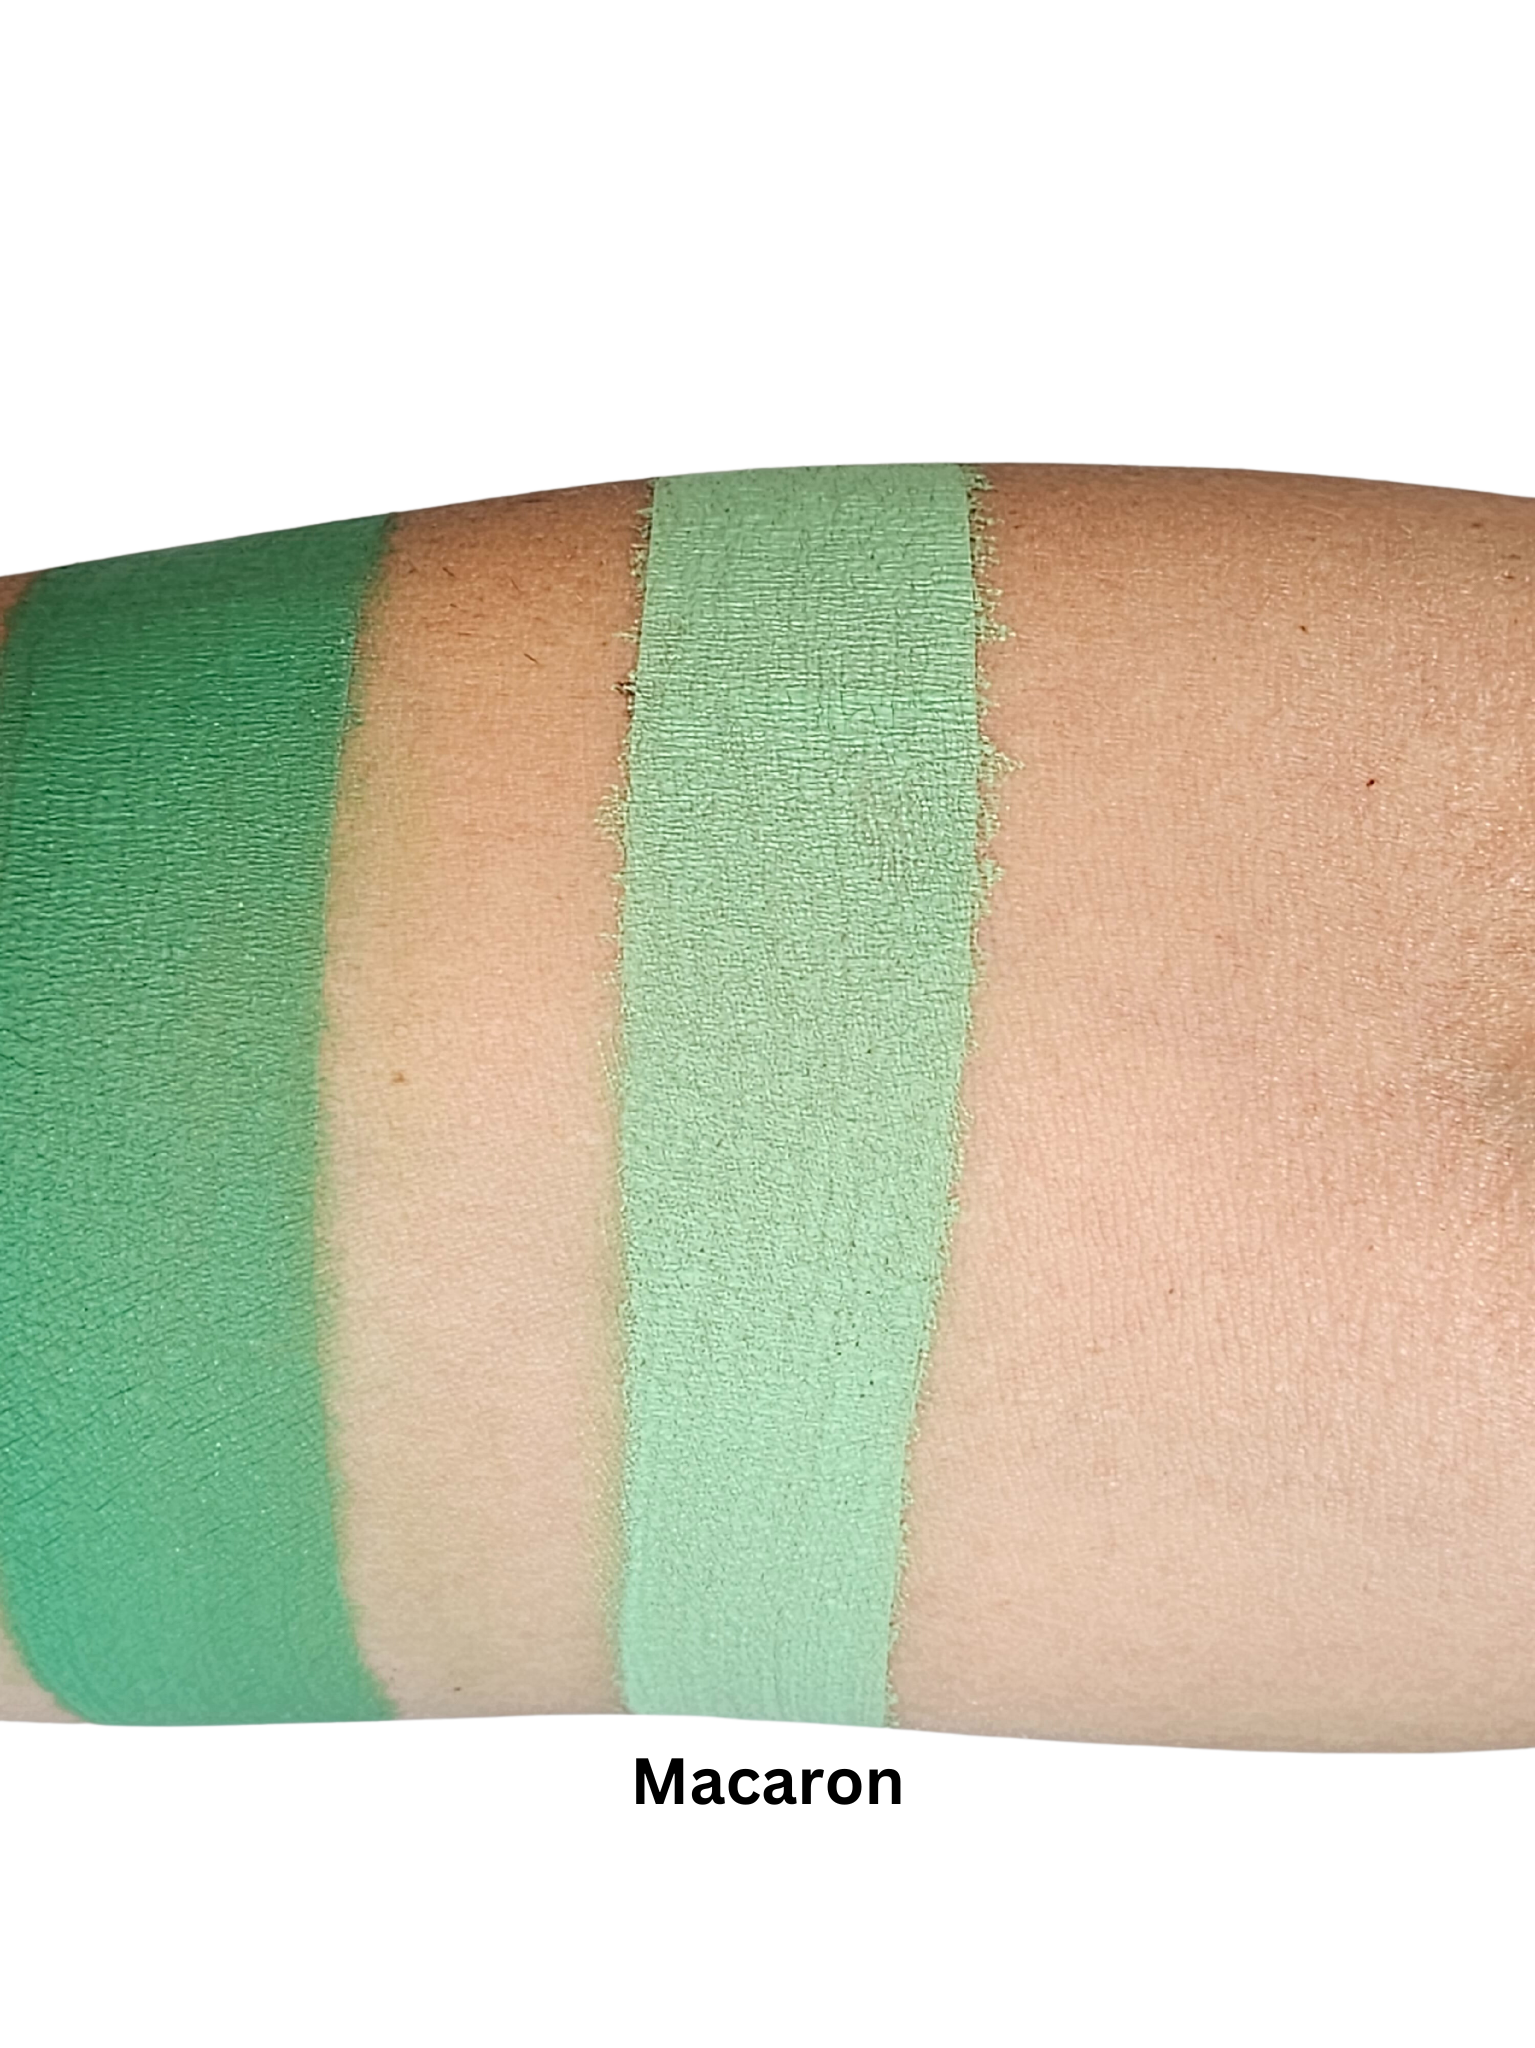 Fusion Body Art Face Paint - Prime Macaron Green 32g